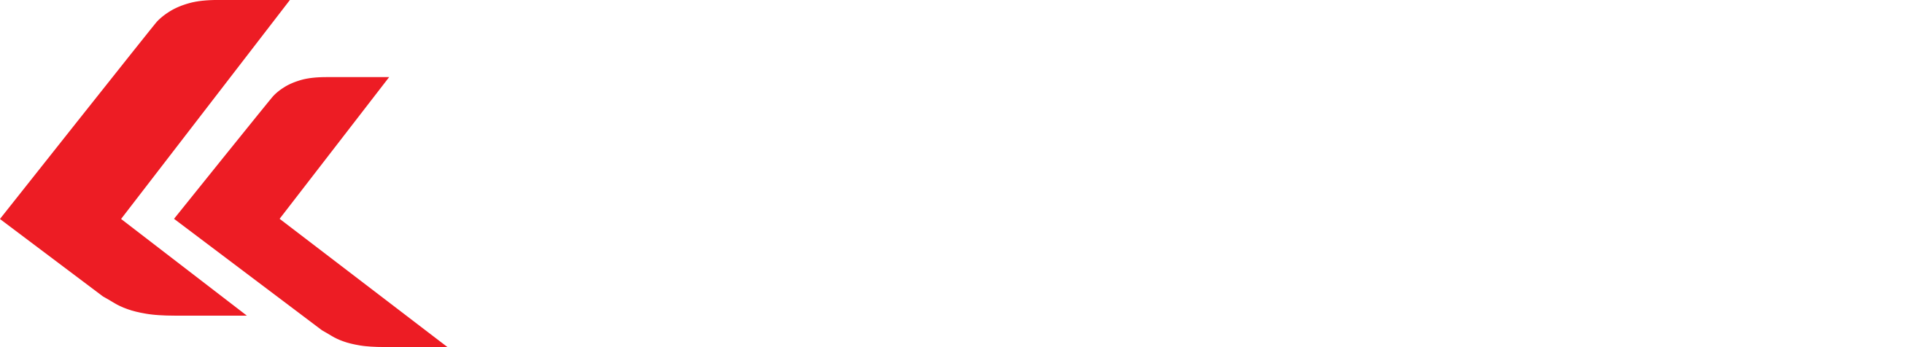 logo-kross-bianco